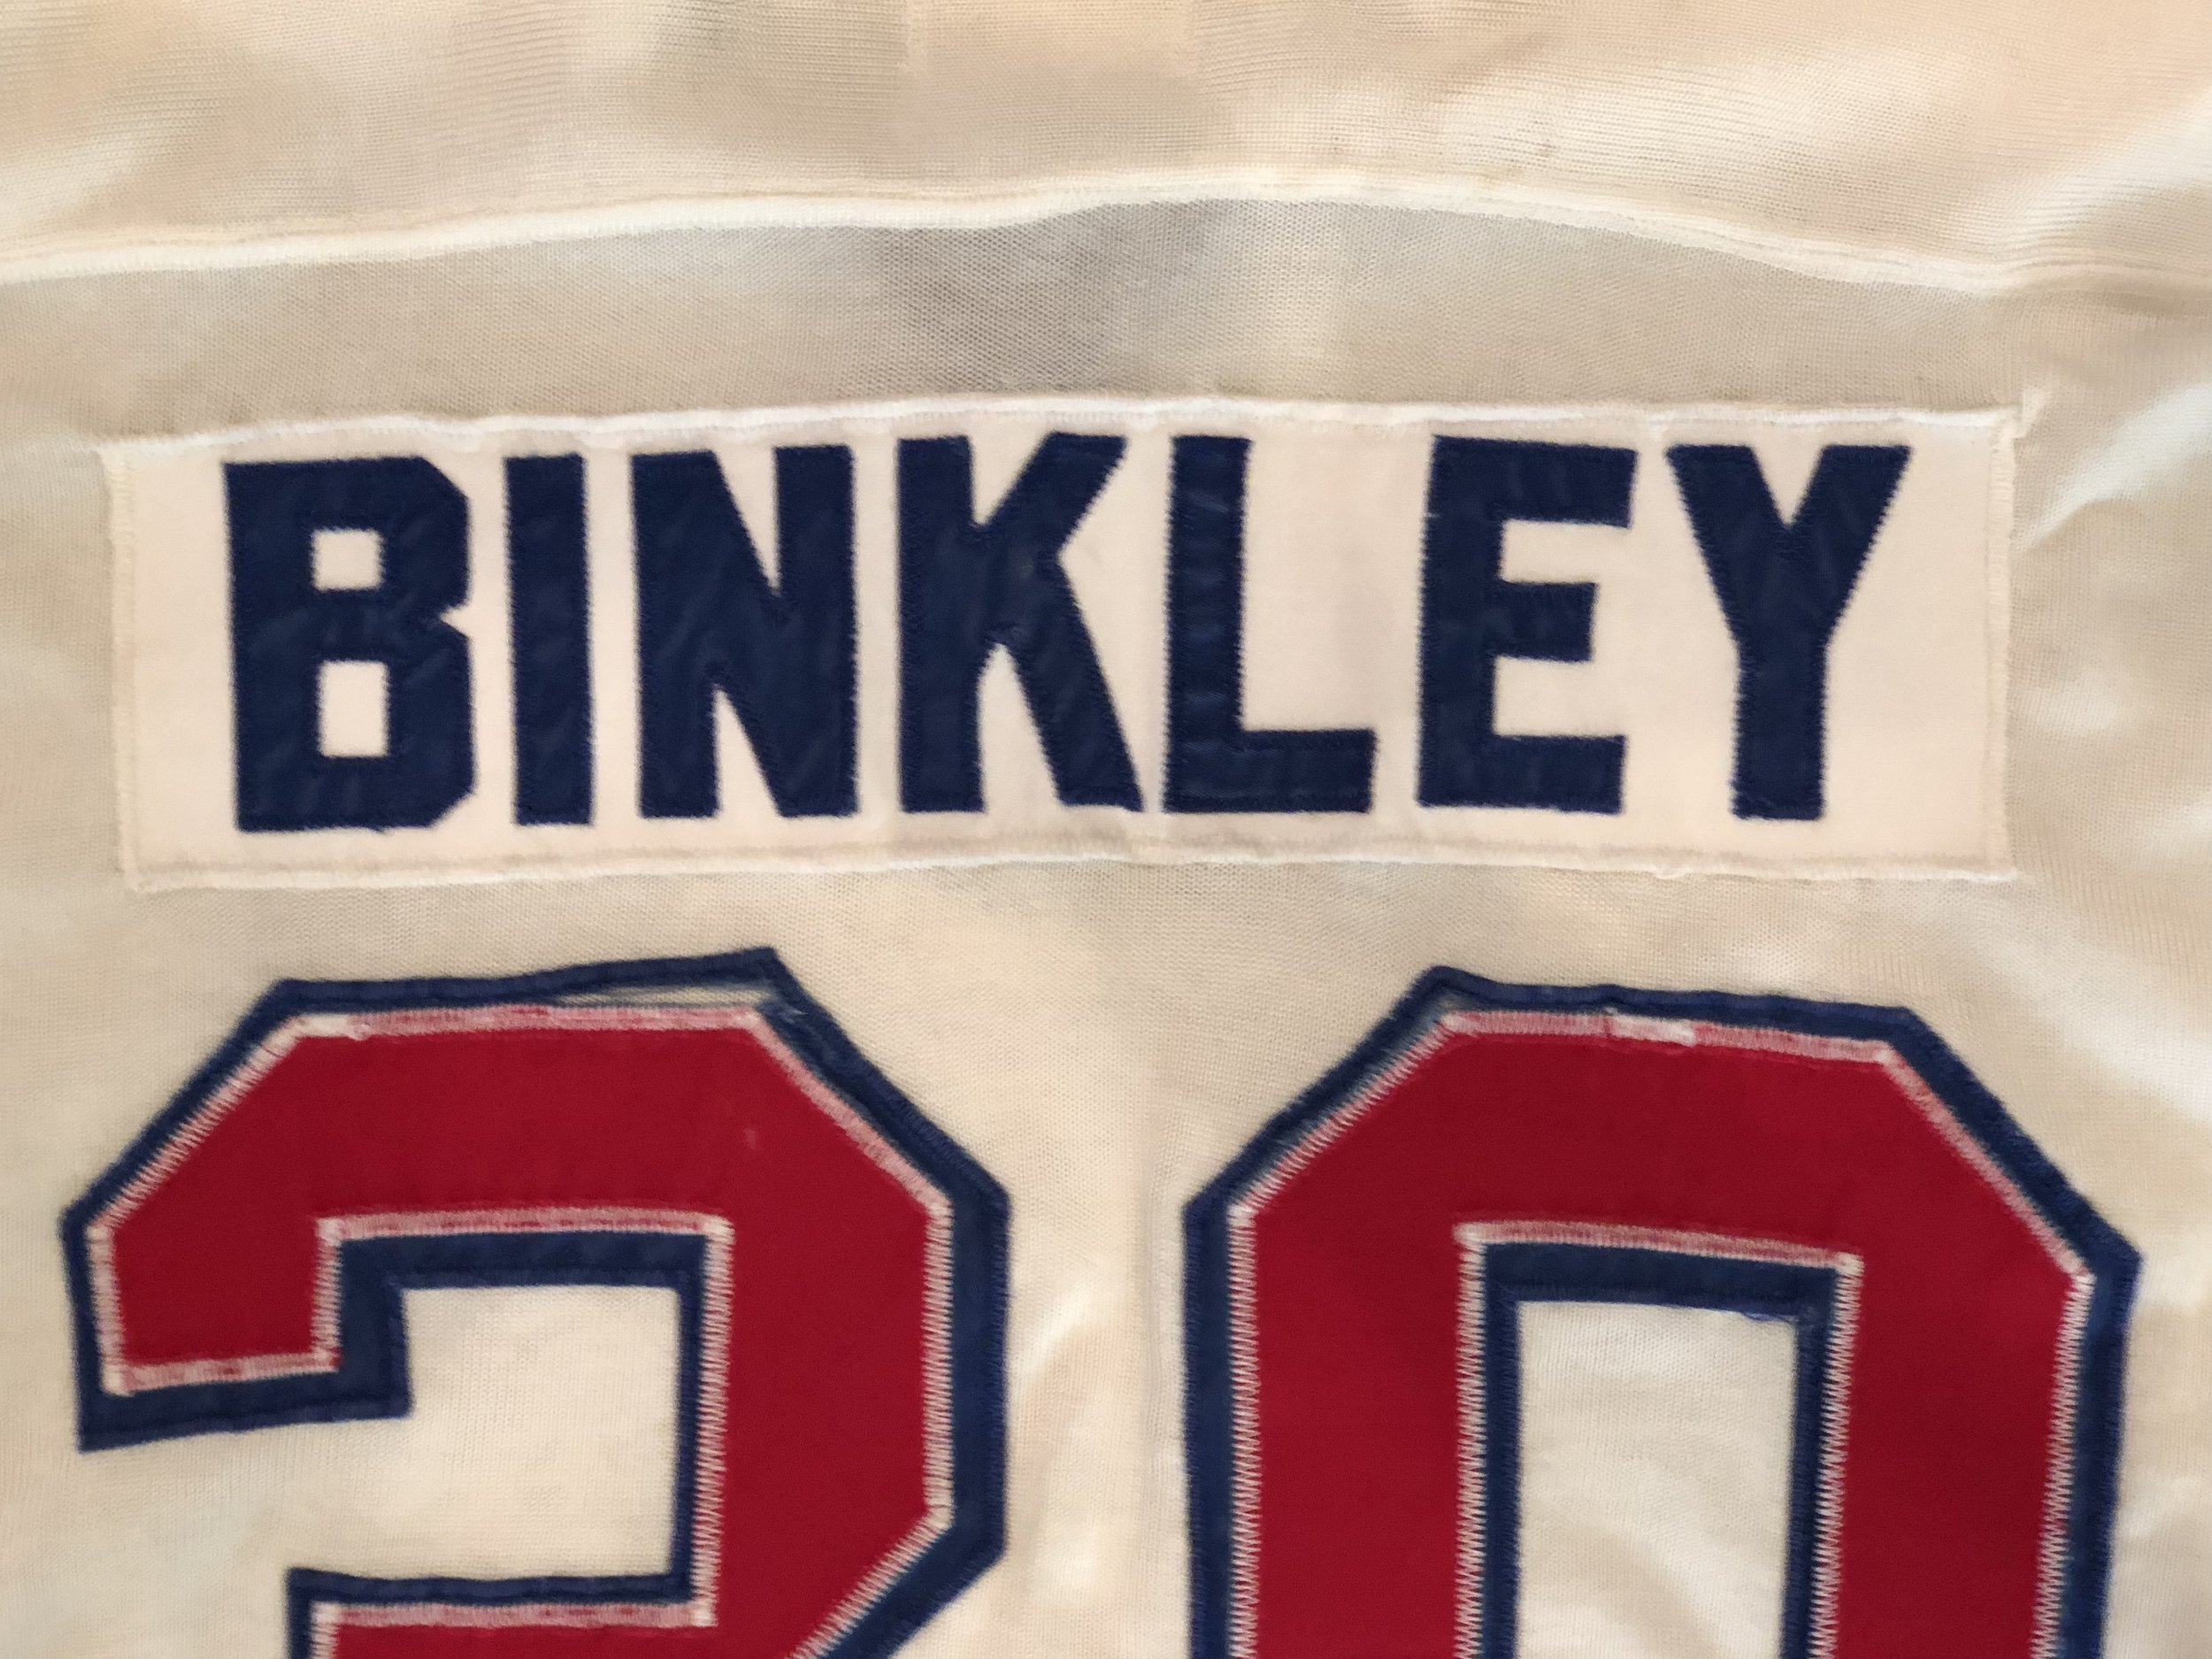 Les Binkley Toros — Game Worn Goalie Jerseys